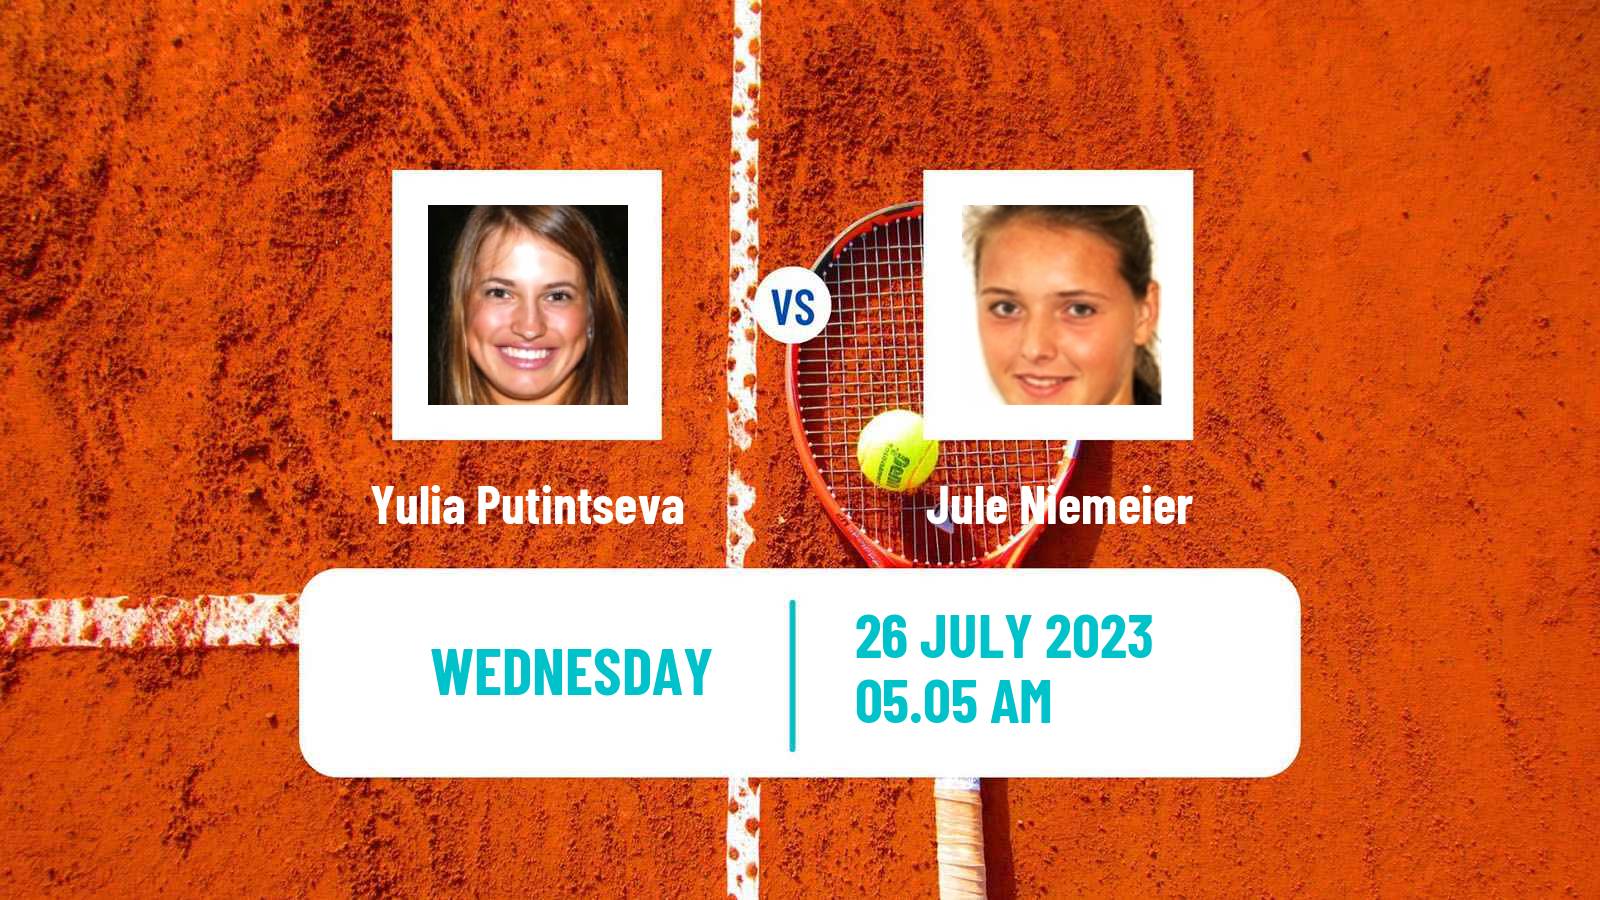 Tennis WTA Hamburg Yulia Putintseva - Jule Niemeier